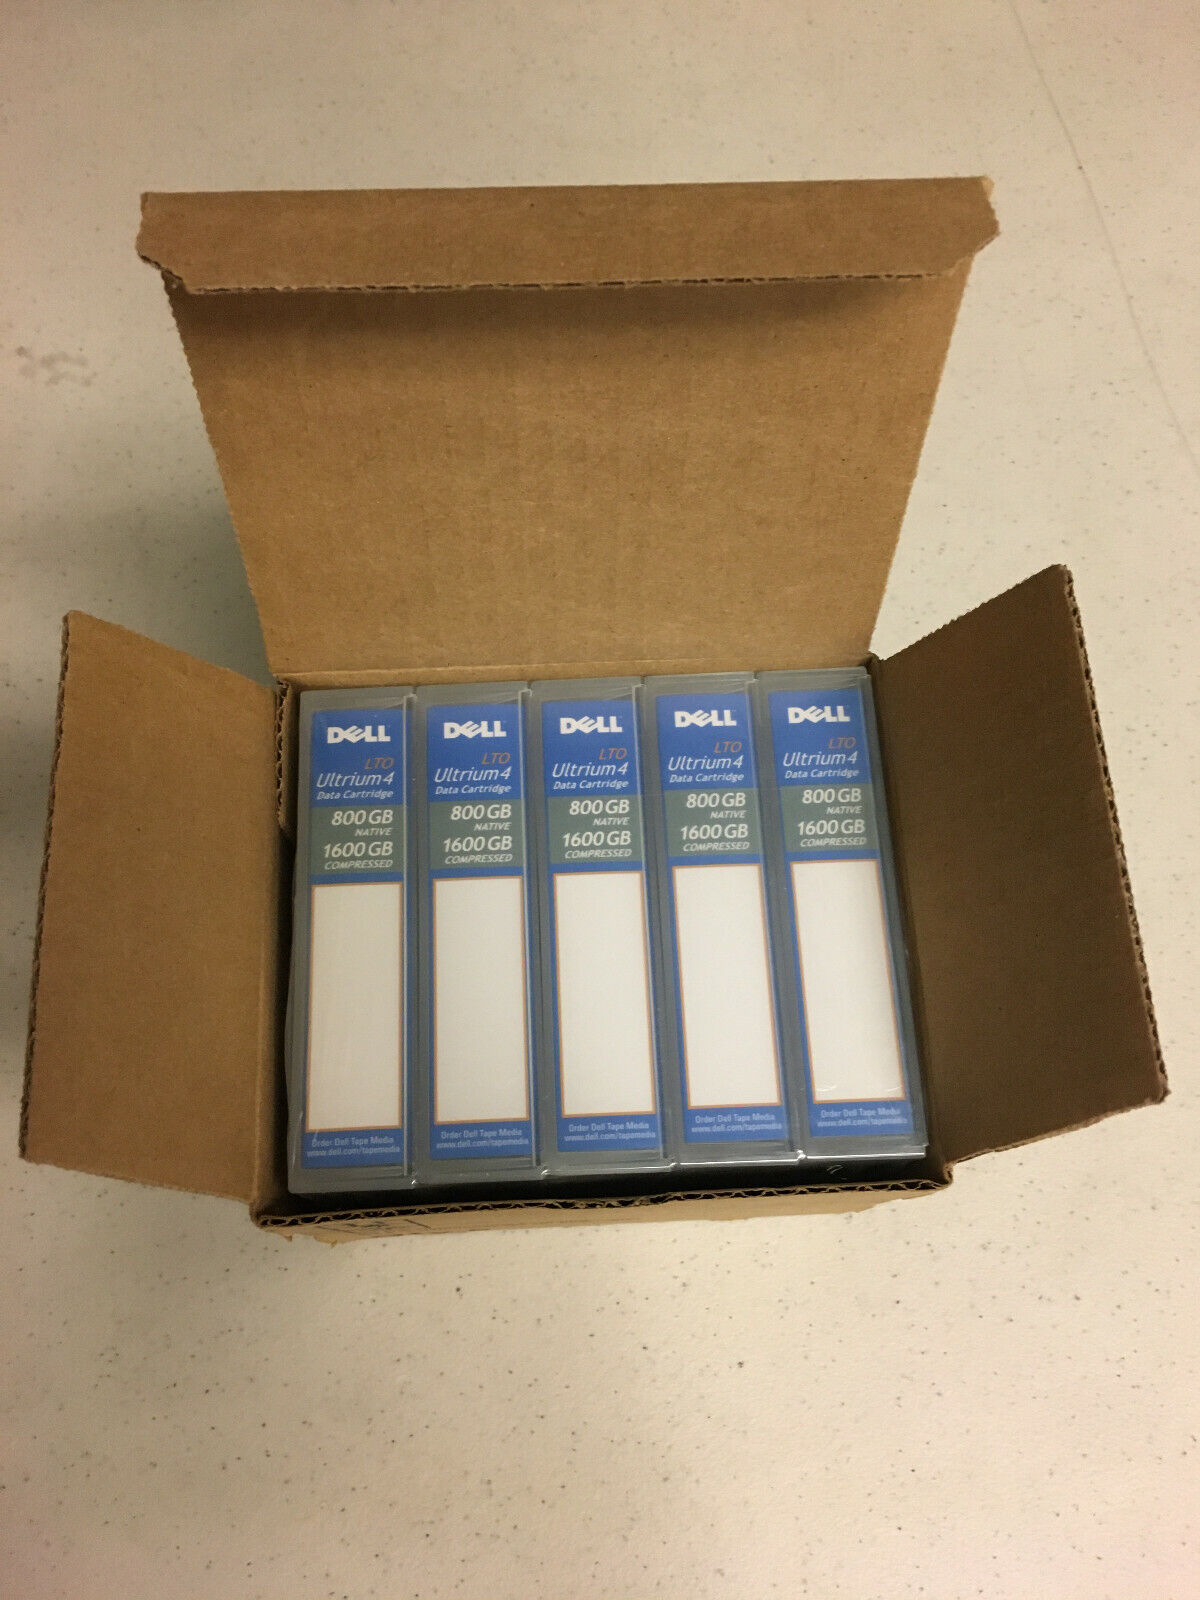 Dell Lto Ultrium 4 Data Cartridges (5 Pack) 800gb Native/1600gb Compressed -nib